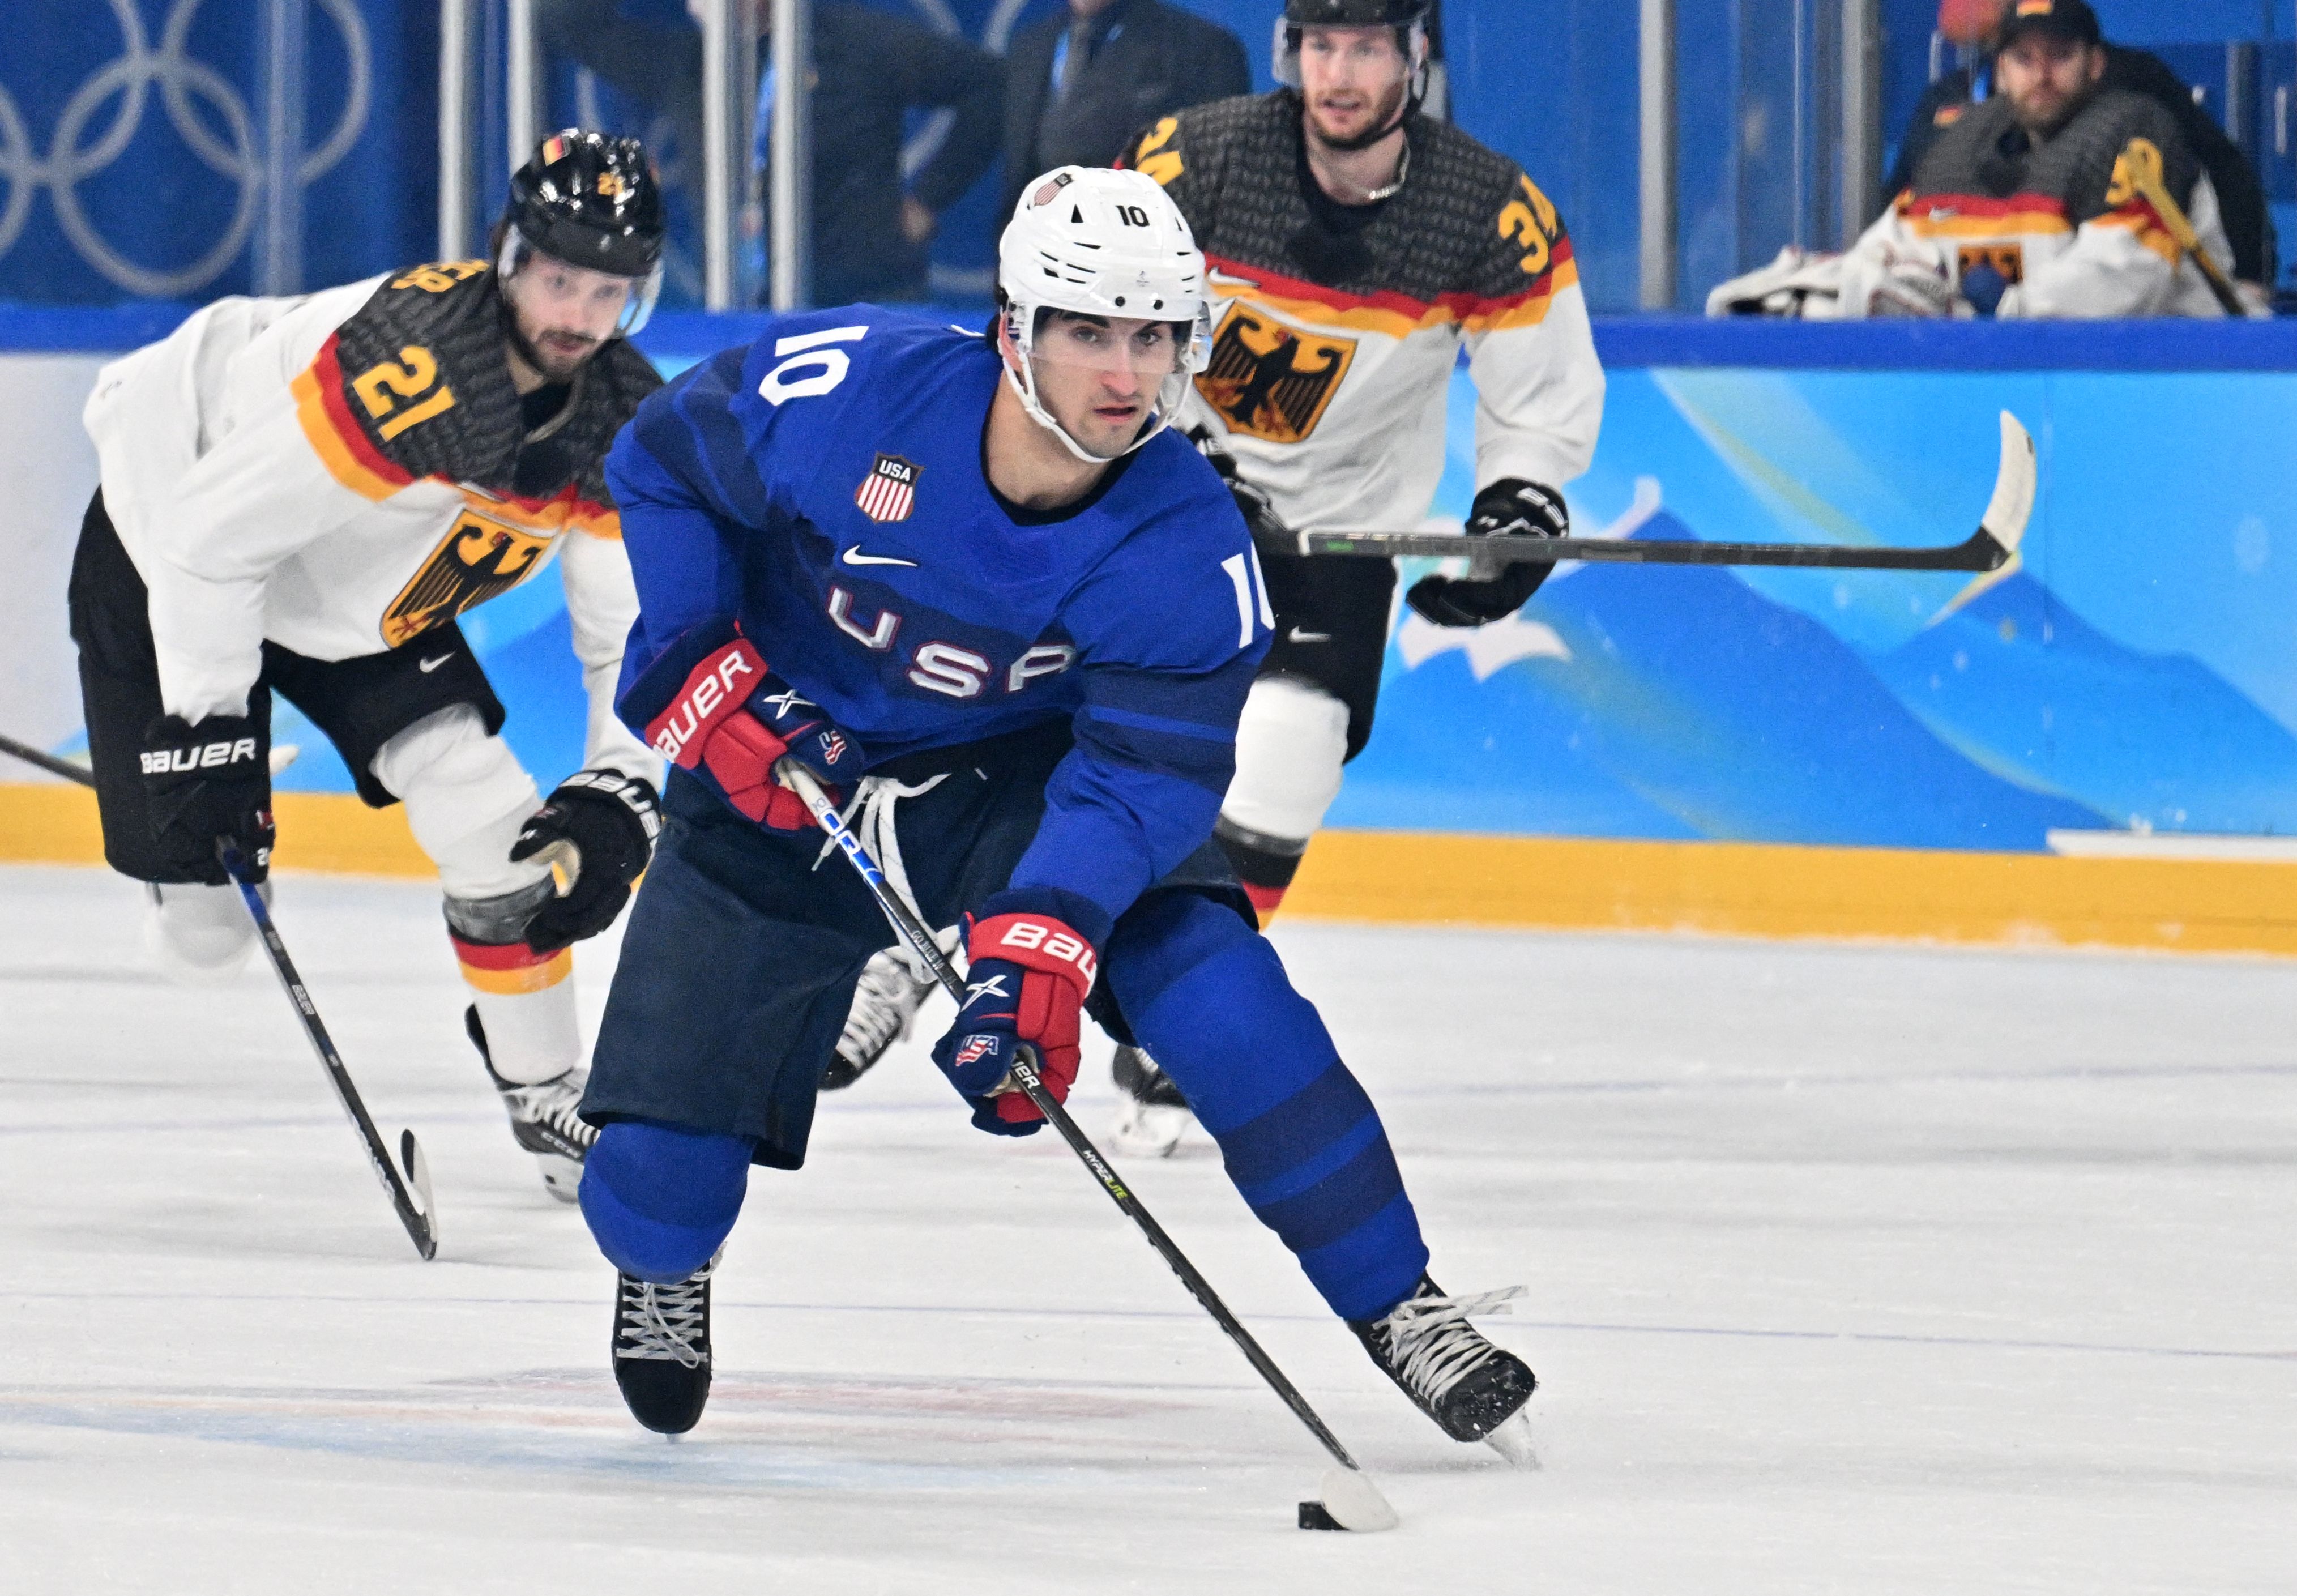 Beijing 2022 Ice Hockey: Team USA Preview